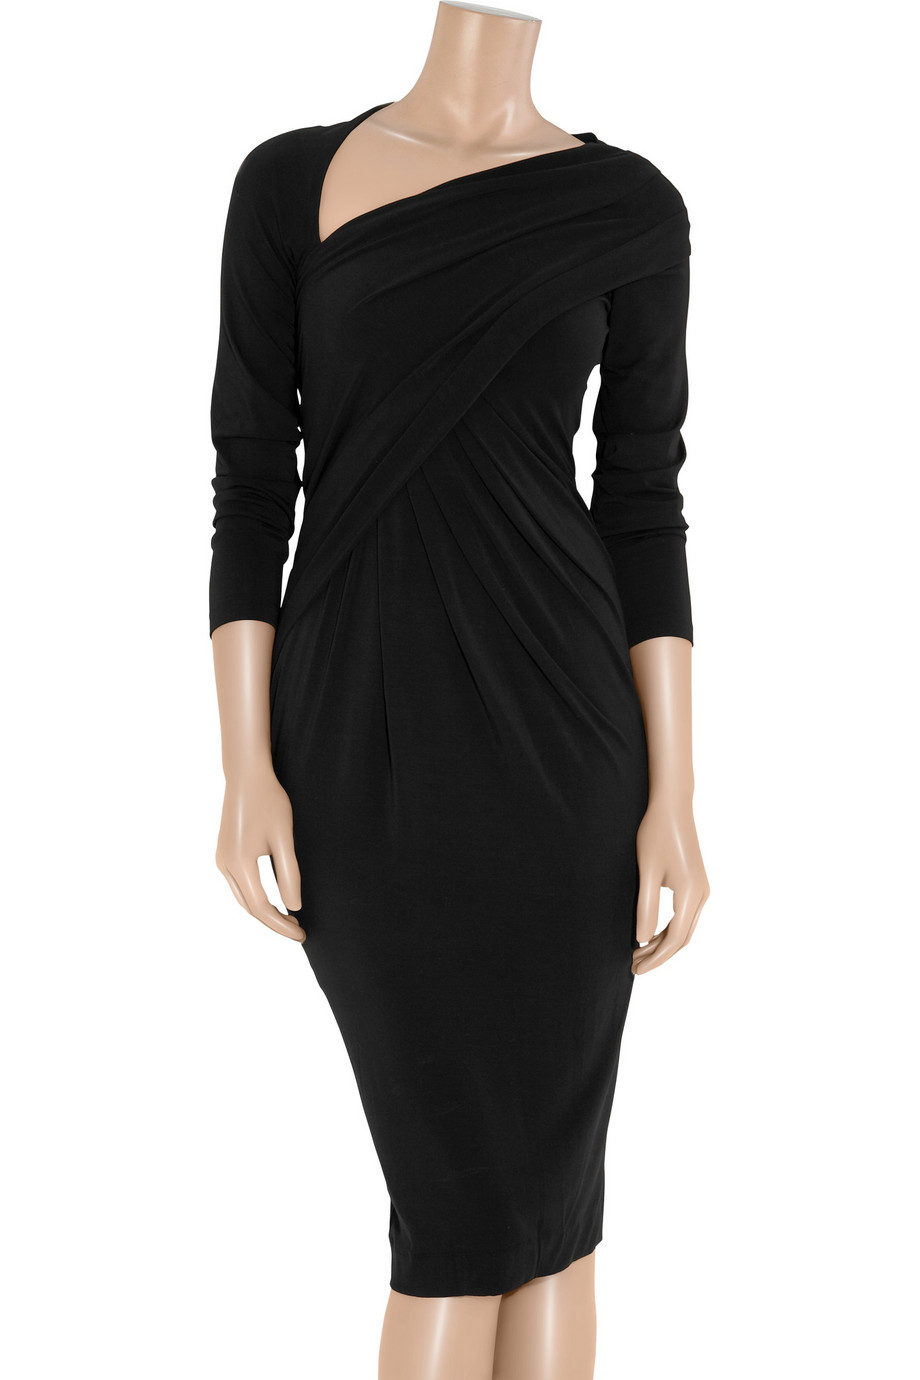 Donna karan Draped Stretch-jersey Dress in Black | Lyst